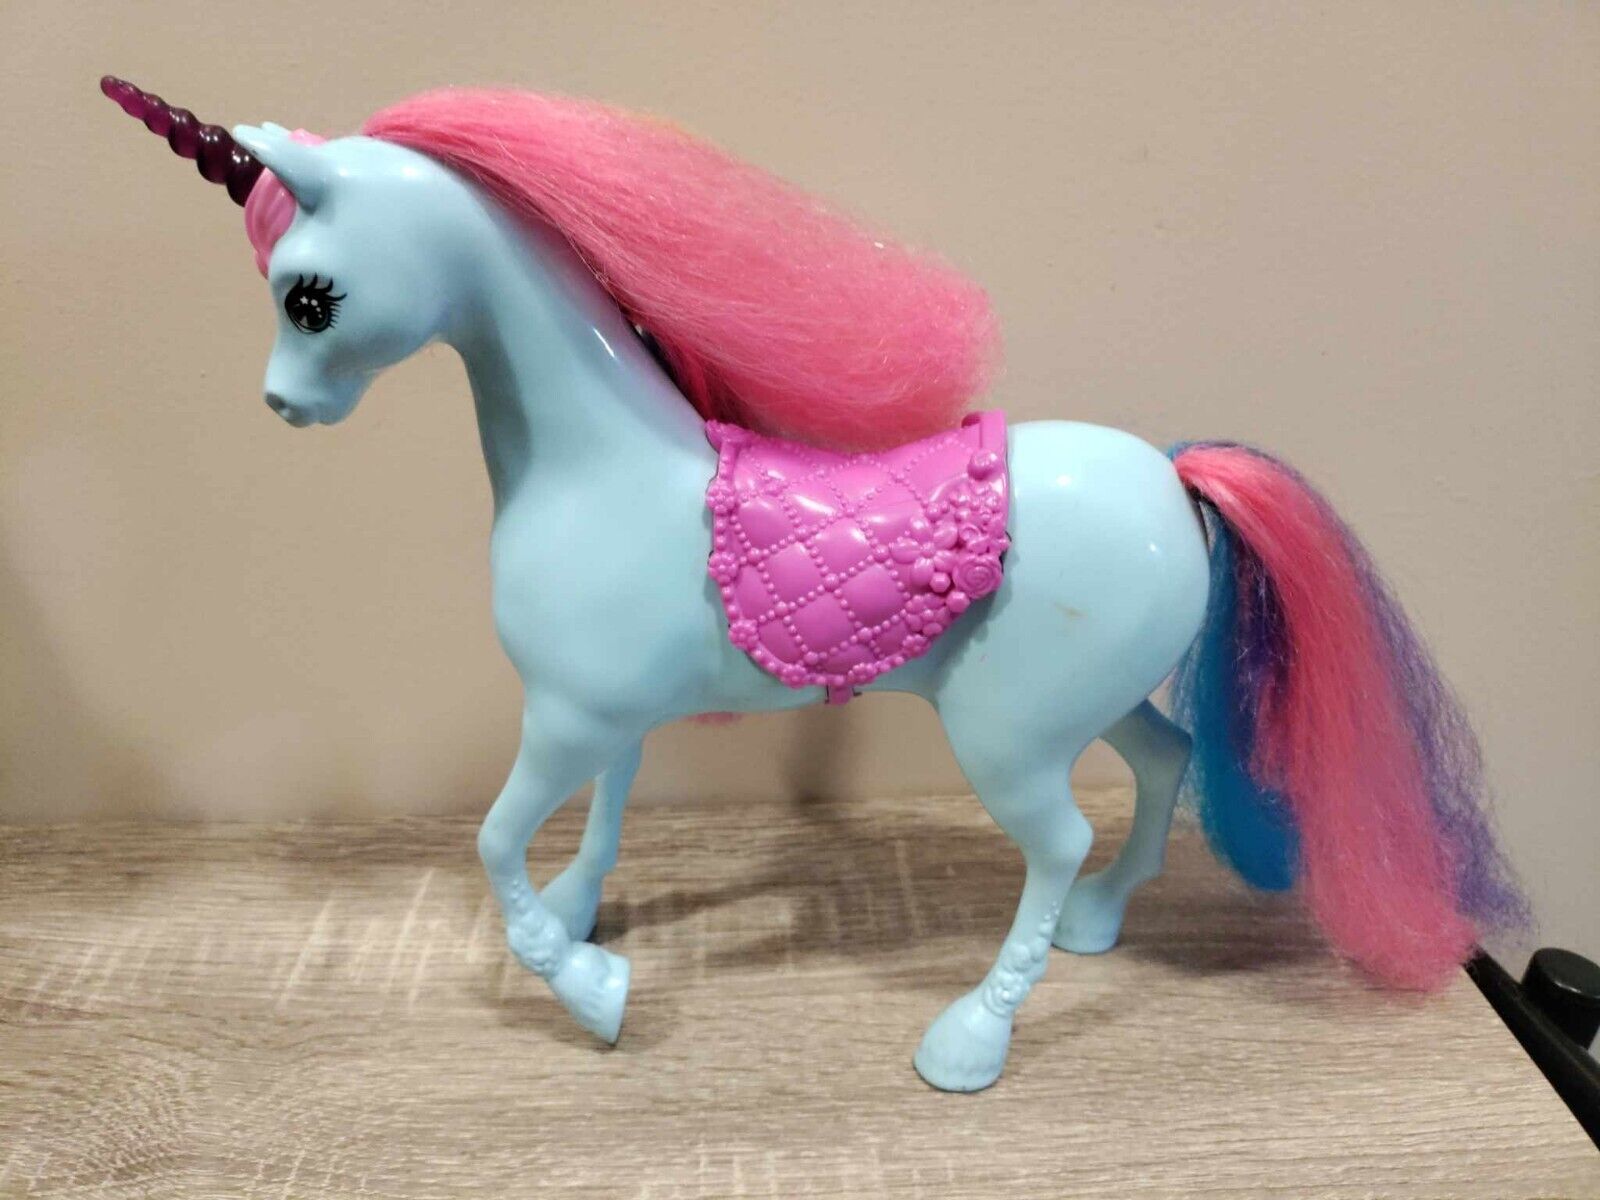 RARE Mattel Barbie Doll Unicorn Toy Rainbow Hair Streaks Blue and Purple Body